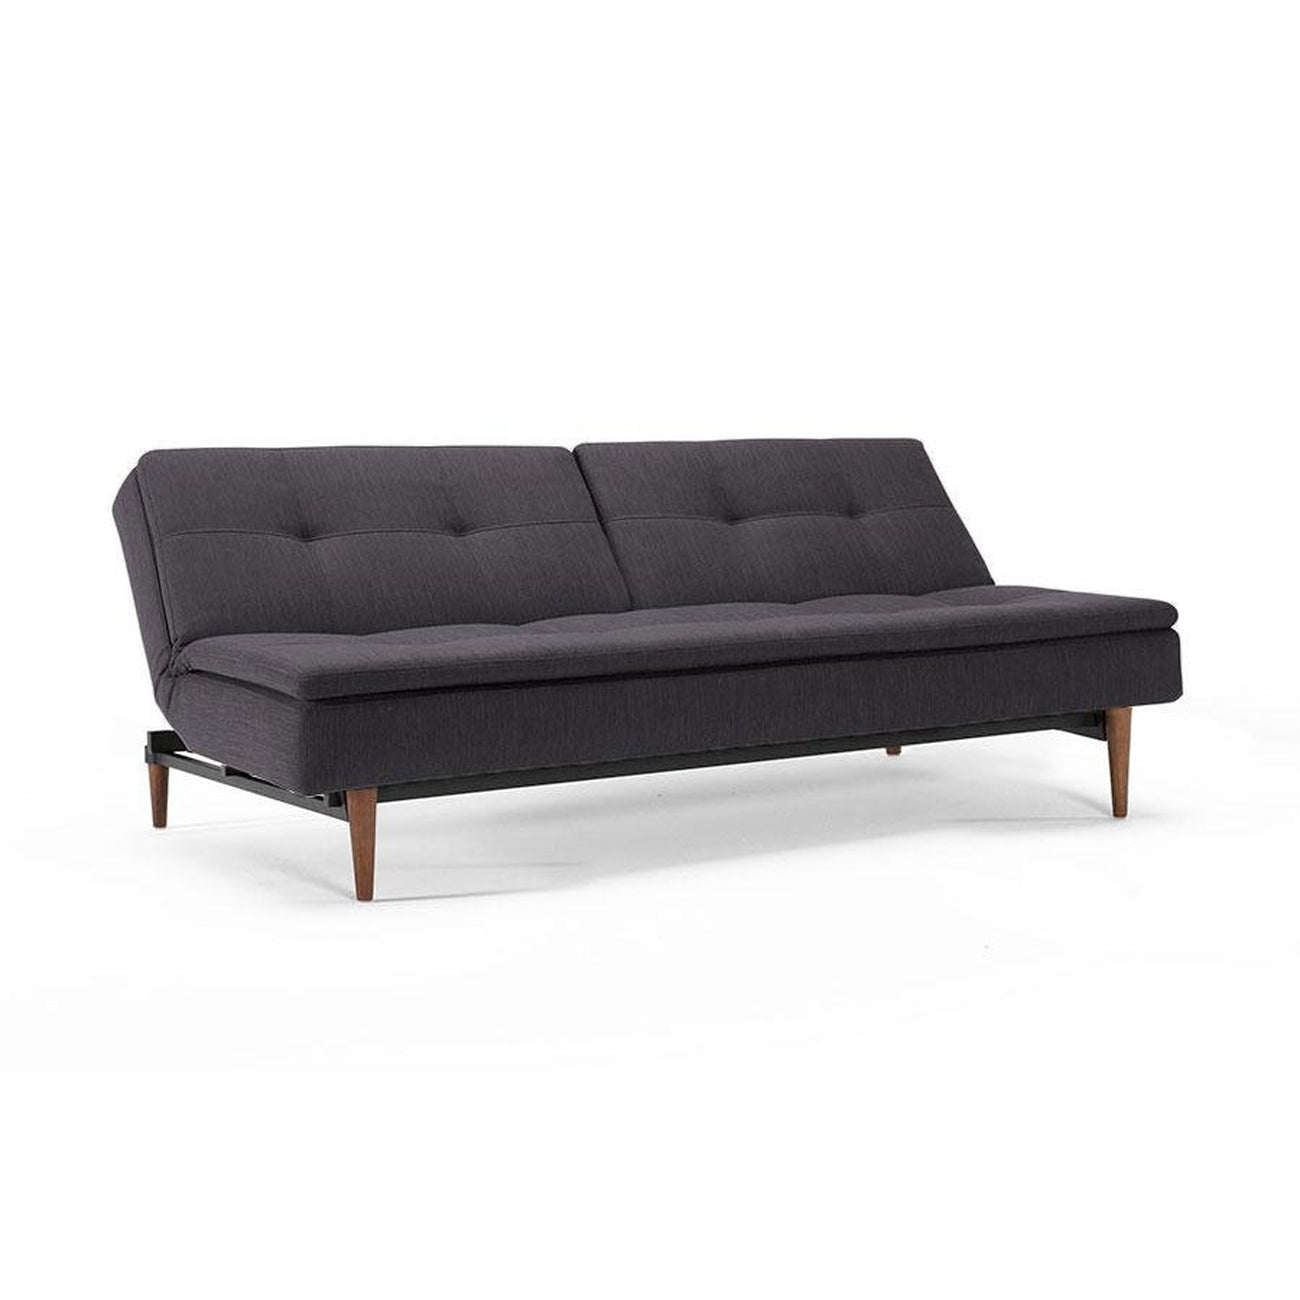 Dublexo Deluxe Sofa,DARK WOOD-Innovation Living-INNO-94-741050509-10-3-2-SofasElegance Anthracite-7-France and Son